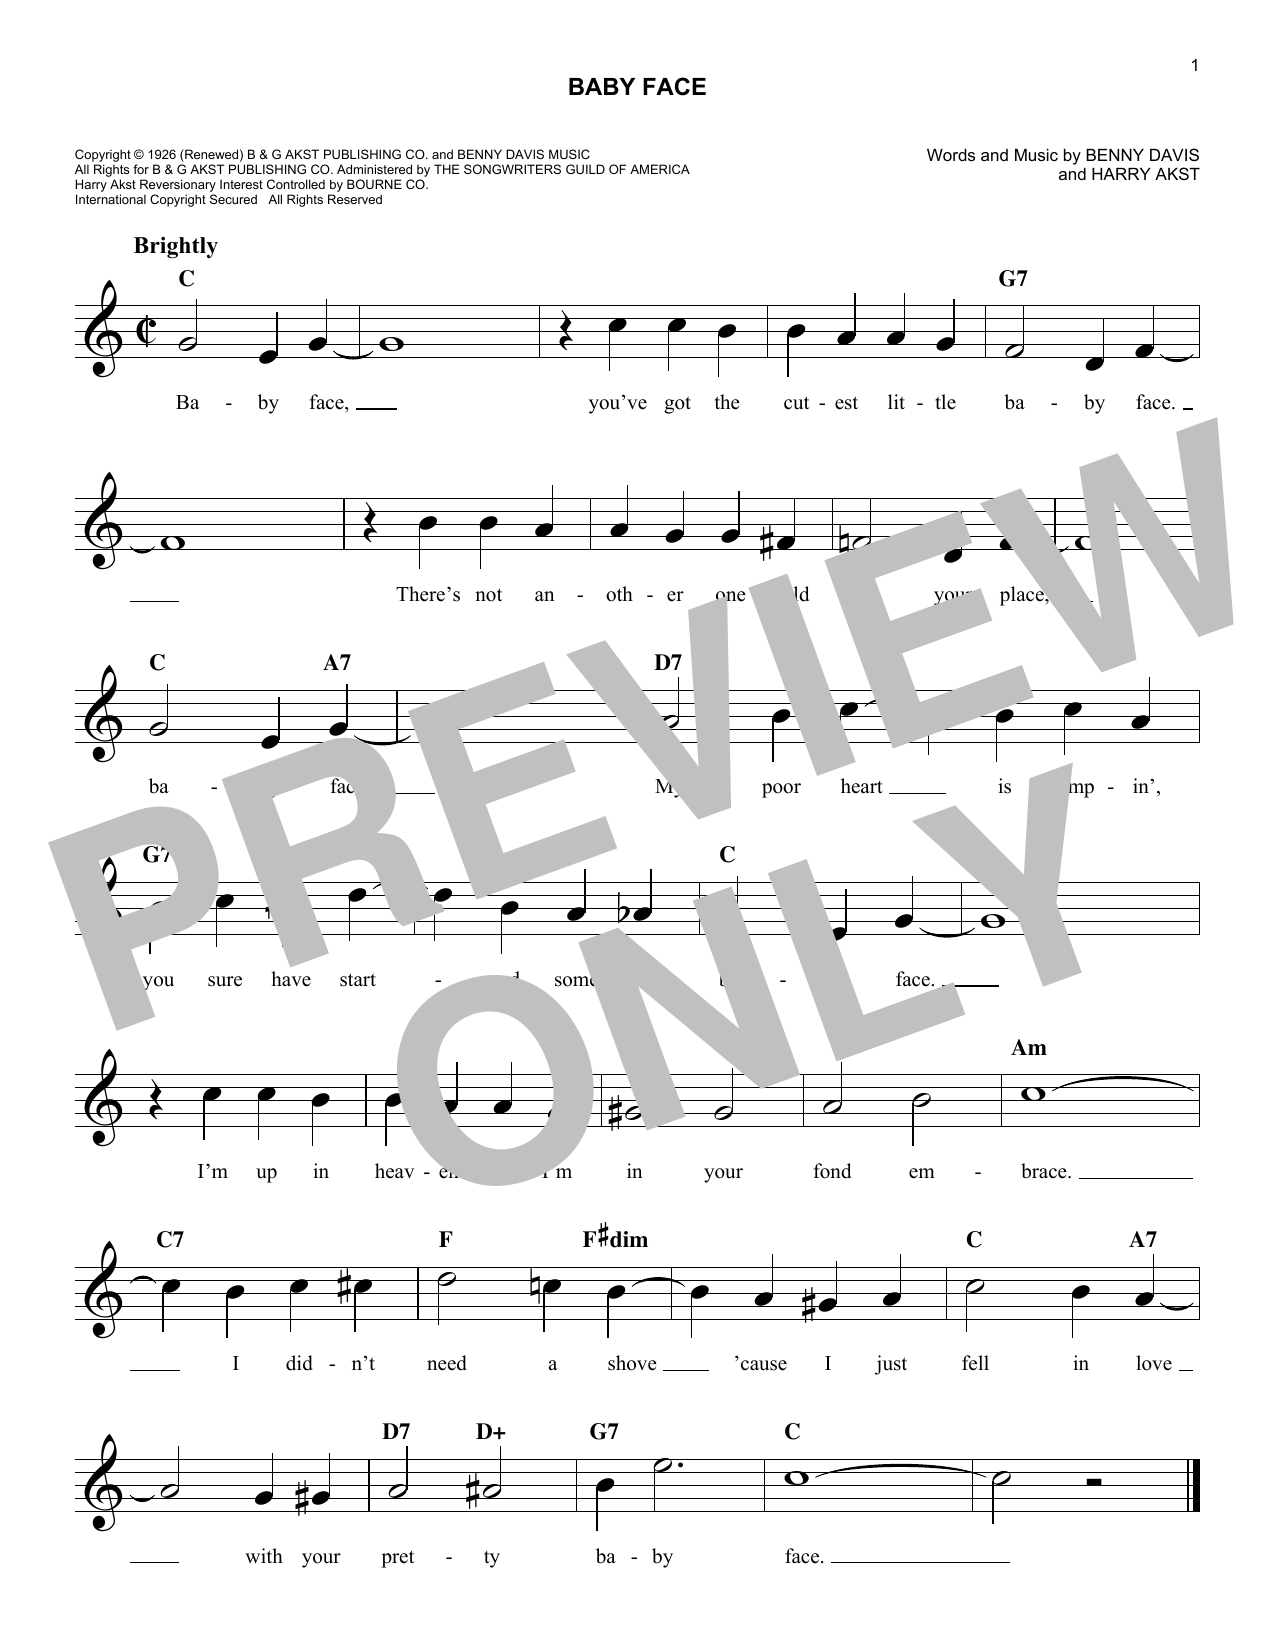 Bobby Darin Baby Face Sheet Music Notes & Chords for Melody Line, Lyrics & Chords - Download or Print PDF